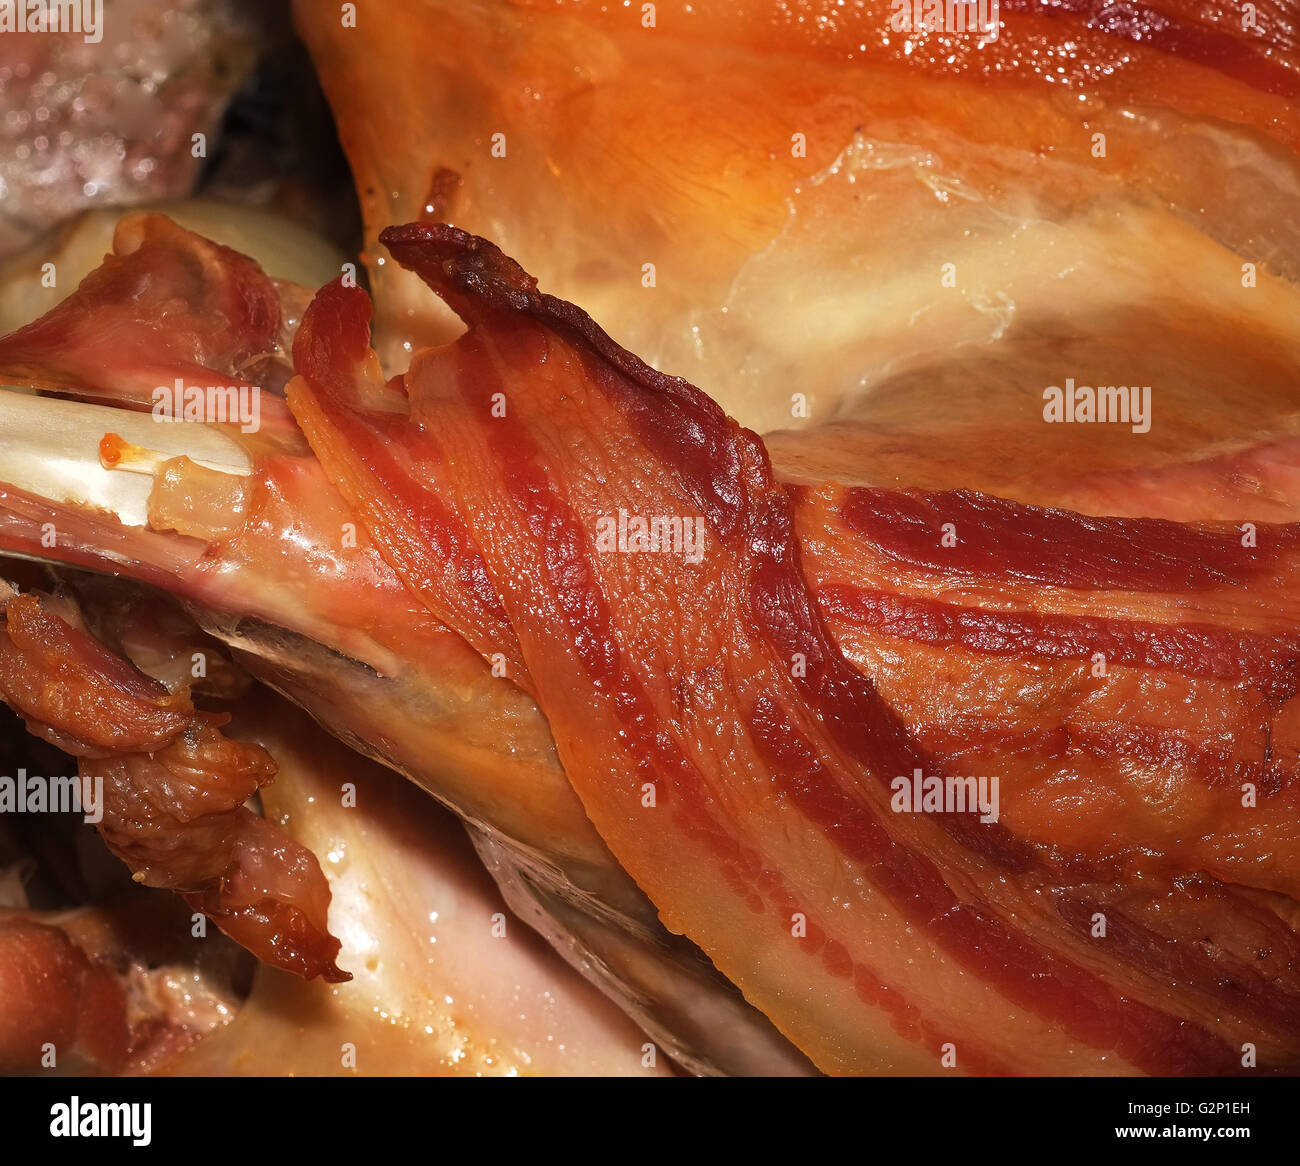 Bacon rasher cooked on turkey leg. Stock Photo